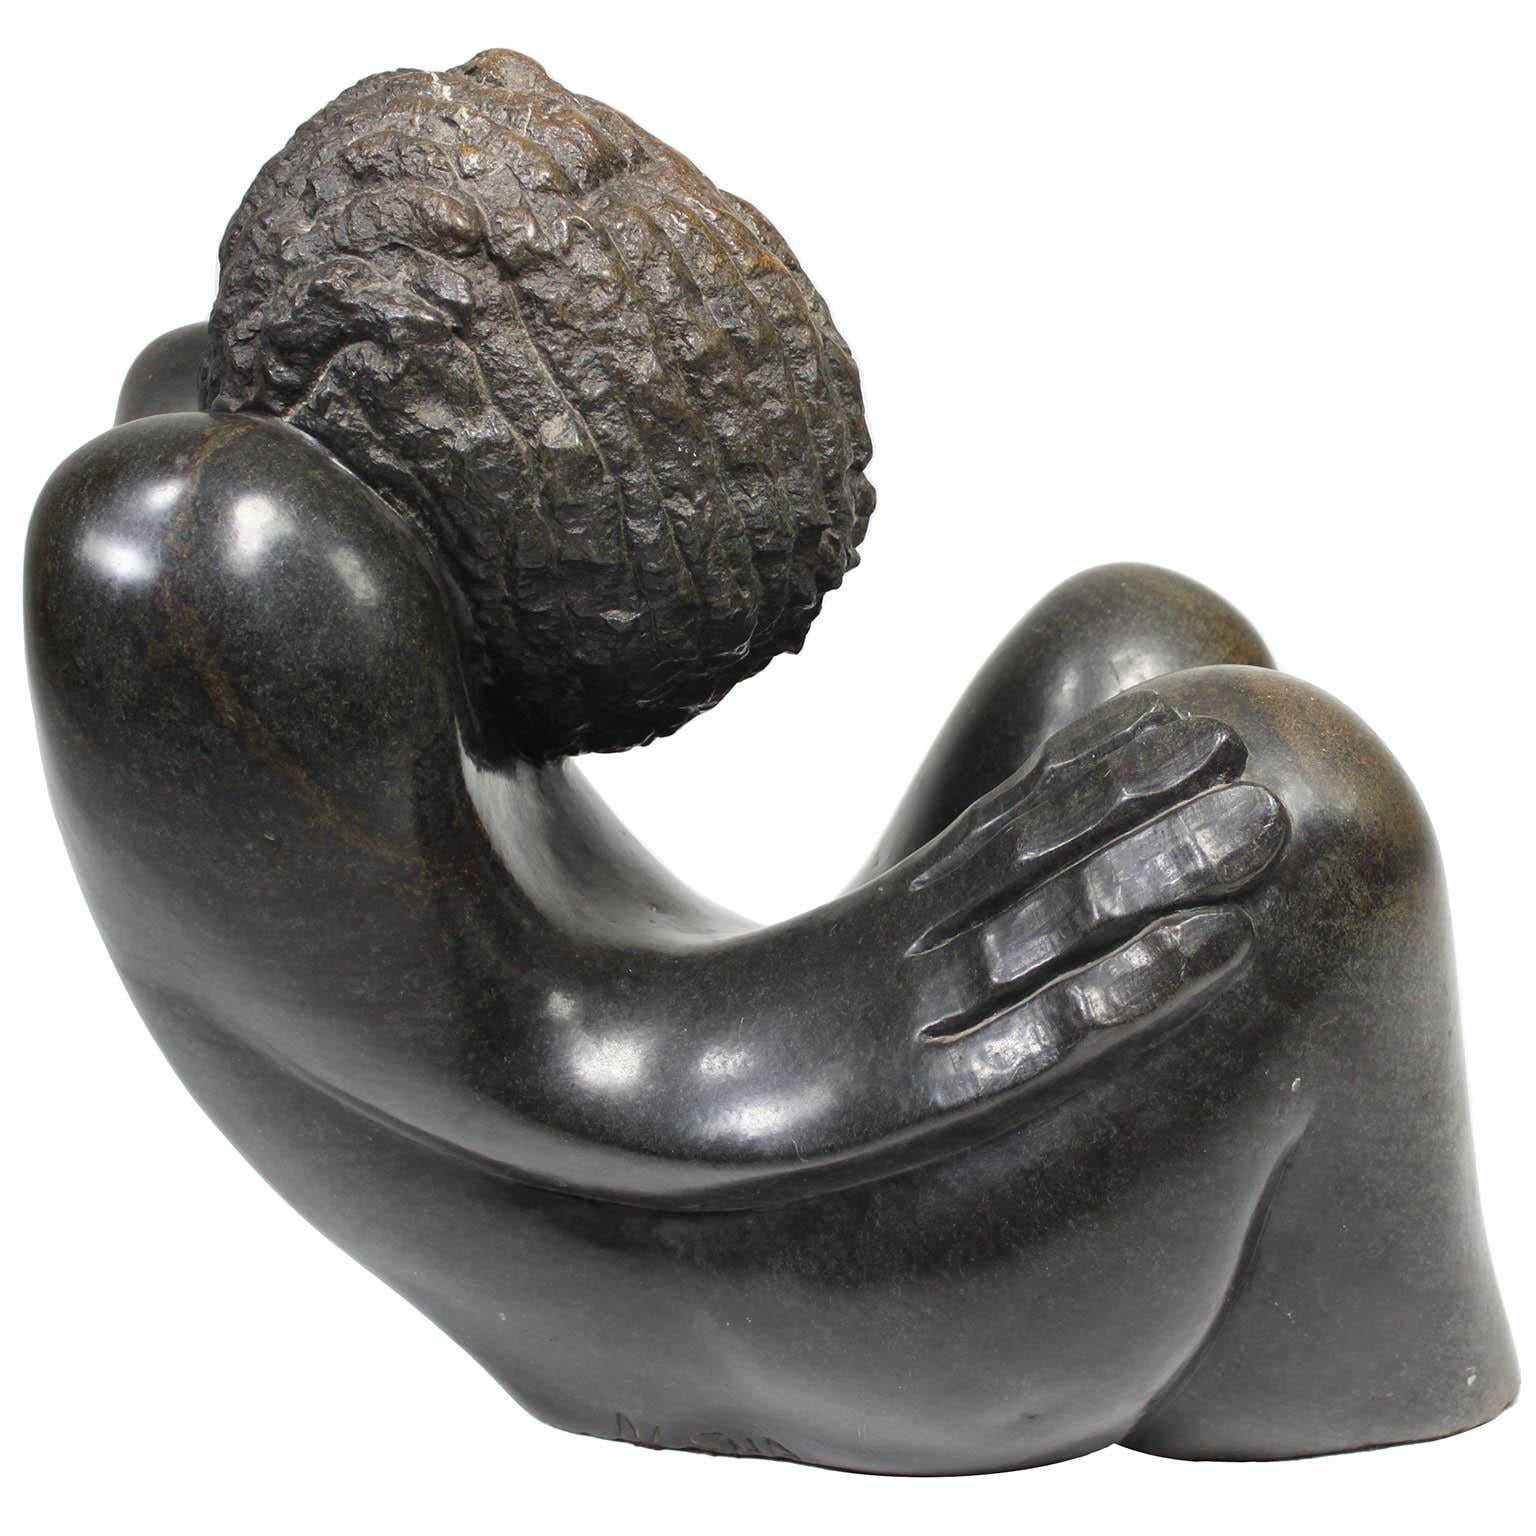 An African Shona Stone Sculpture titled 